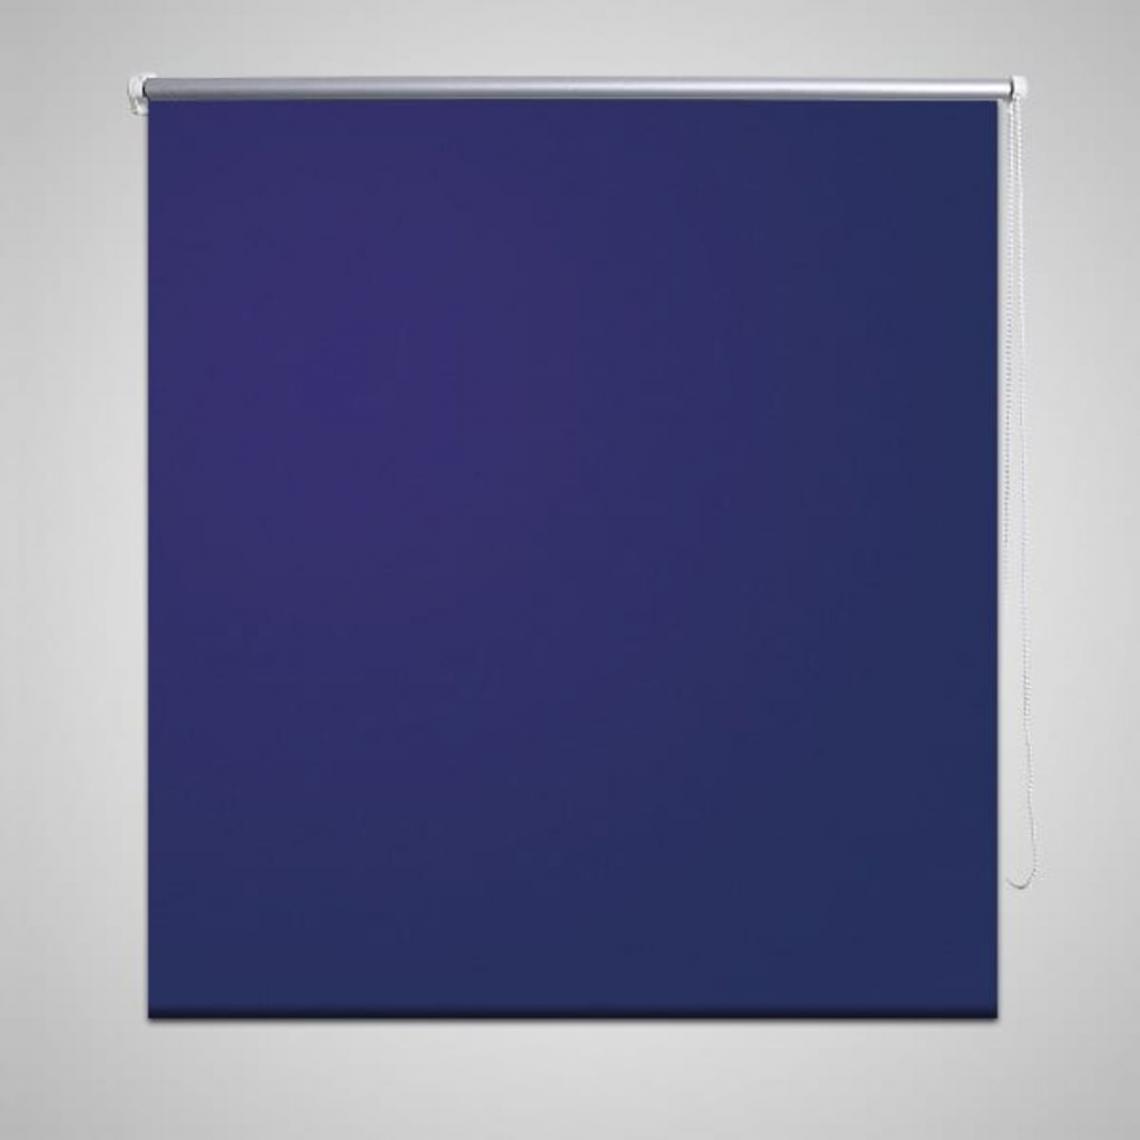 Chunhelife - Store enrouleur occultant 160 x 230 cm bleu - Store banne